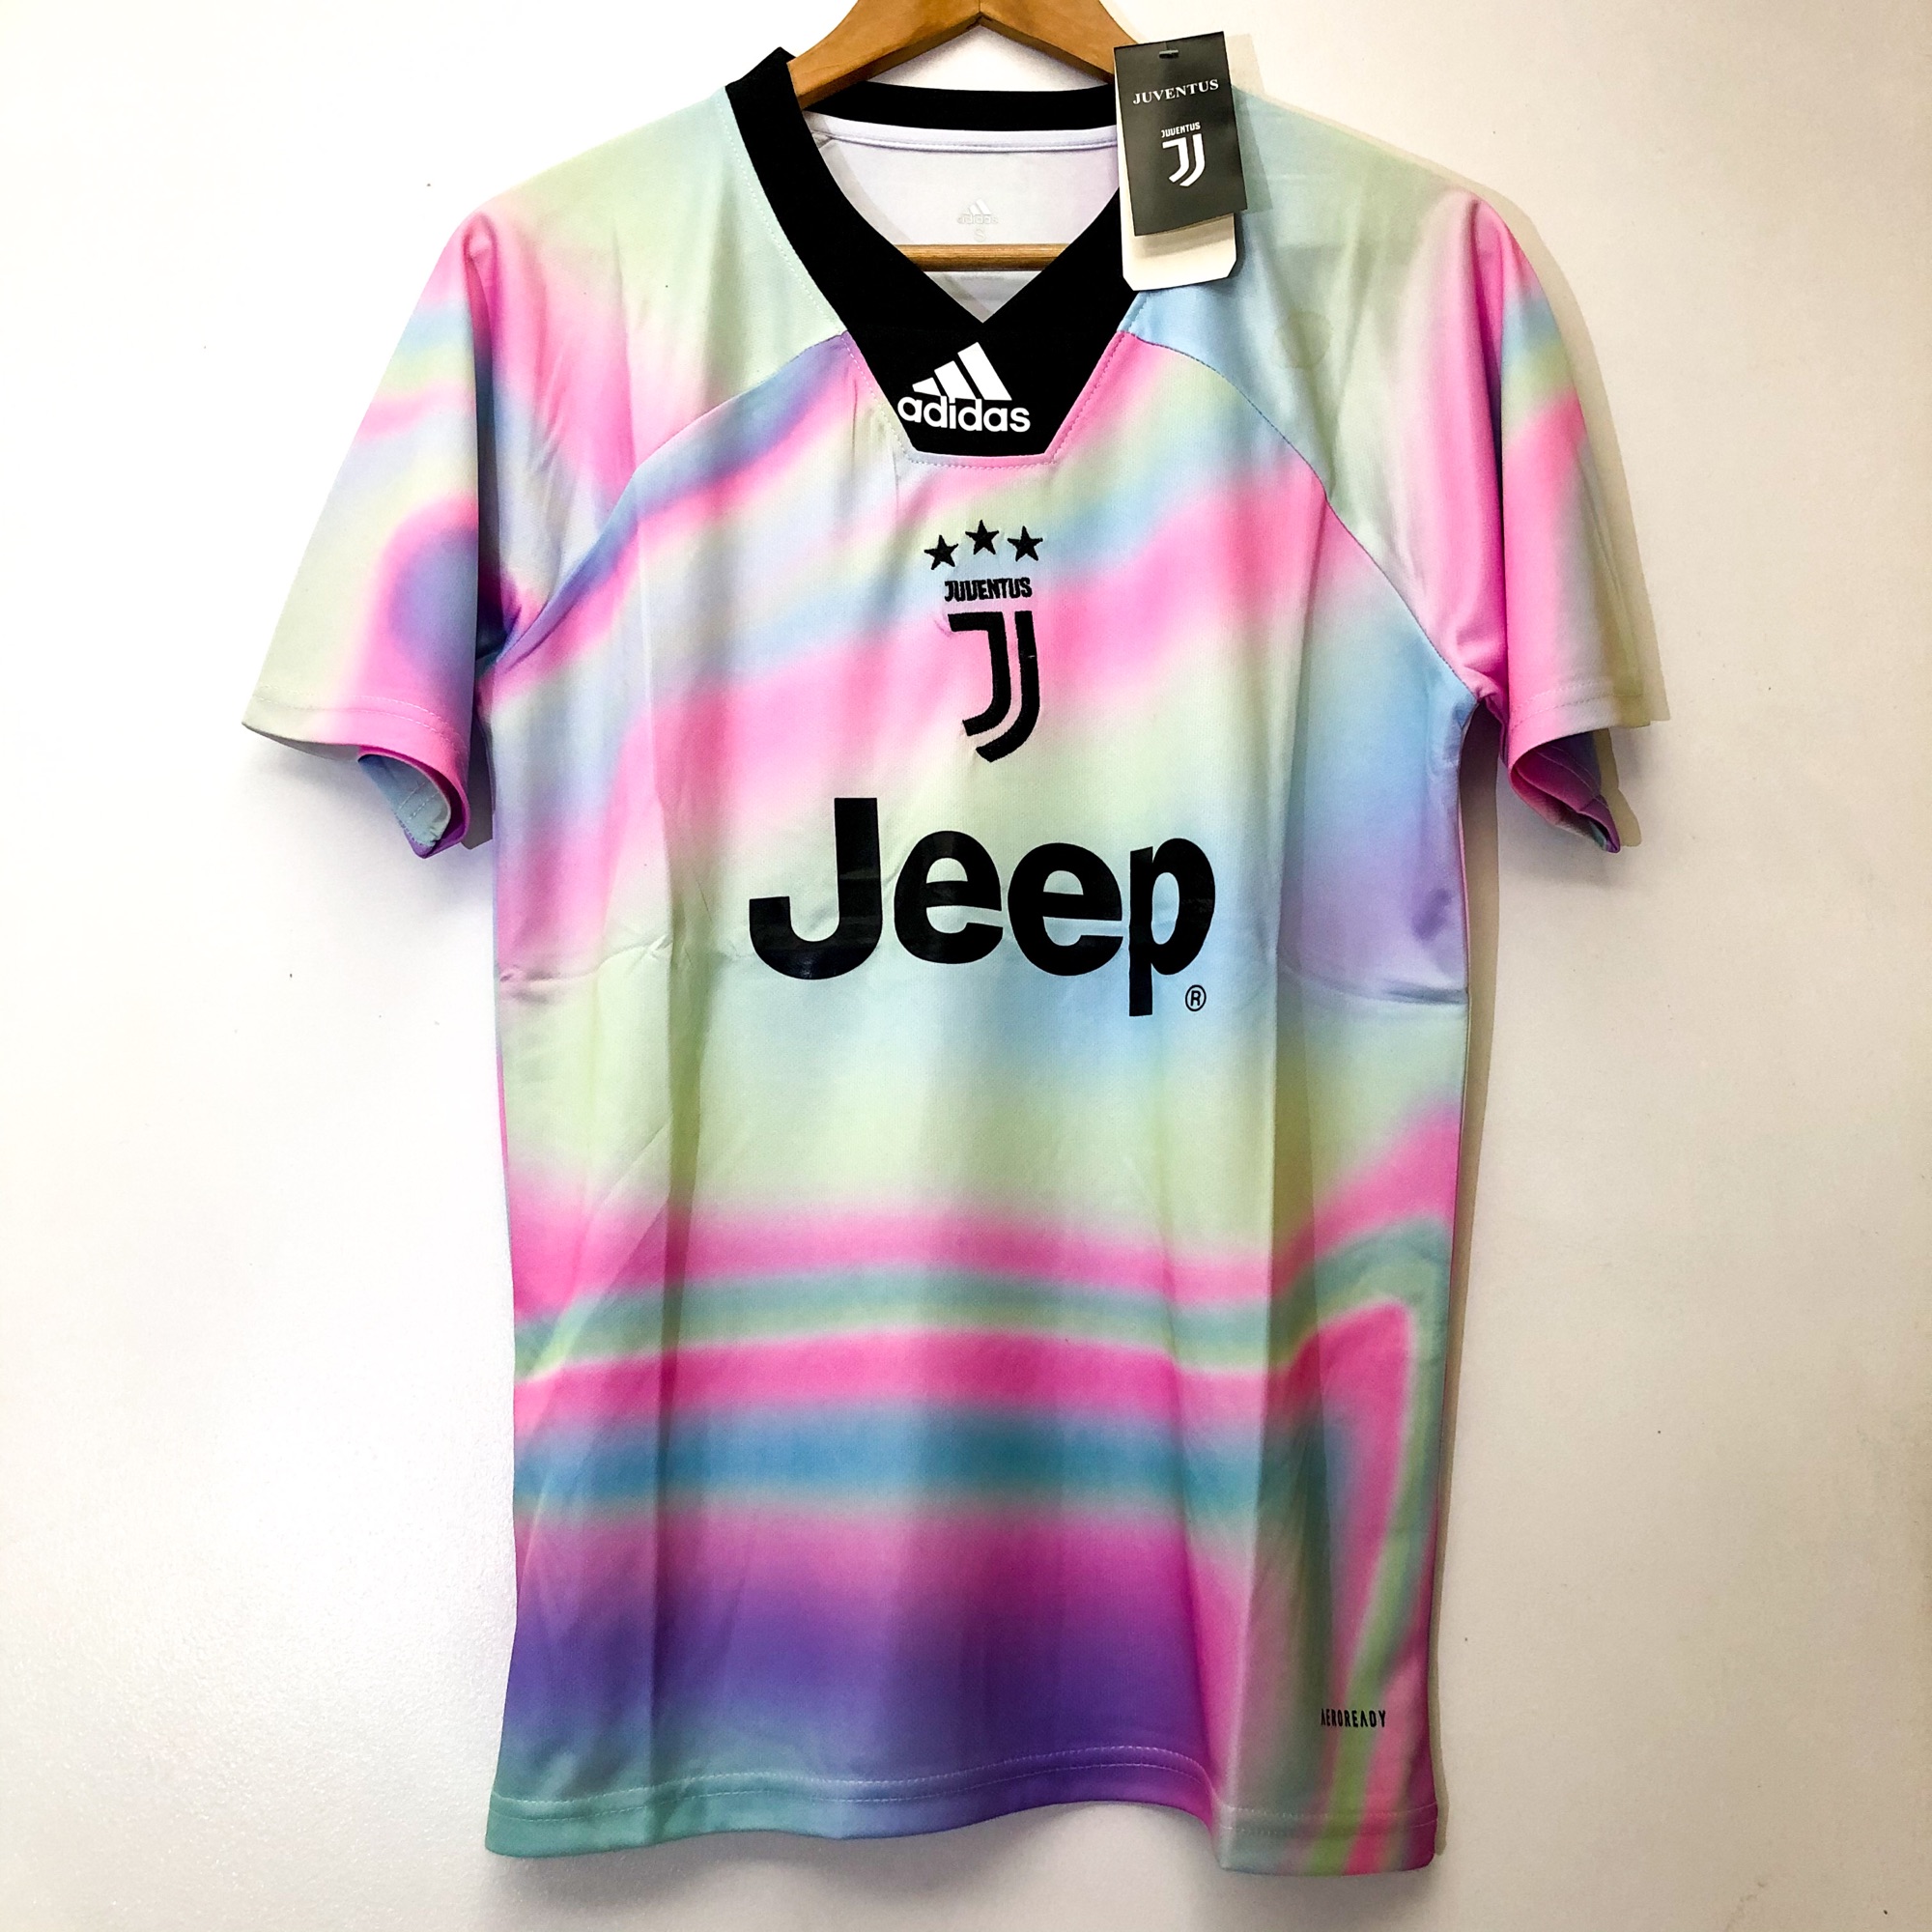 jeep adidas shirt